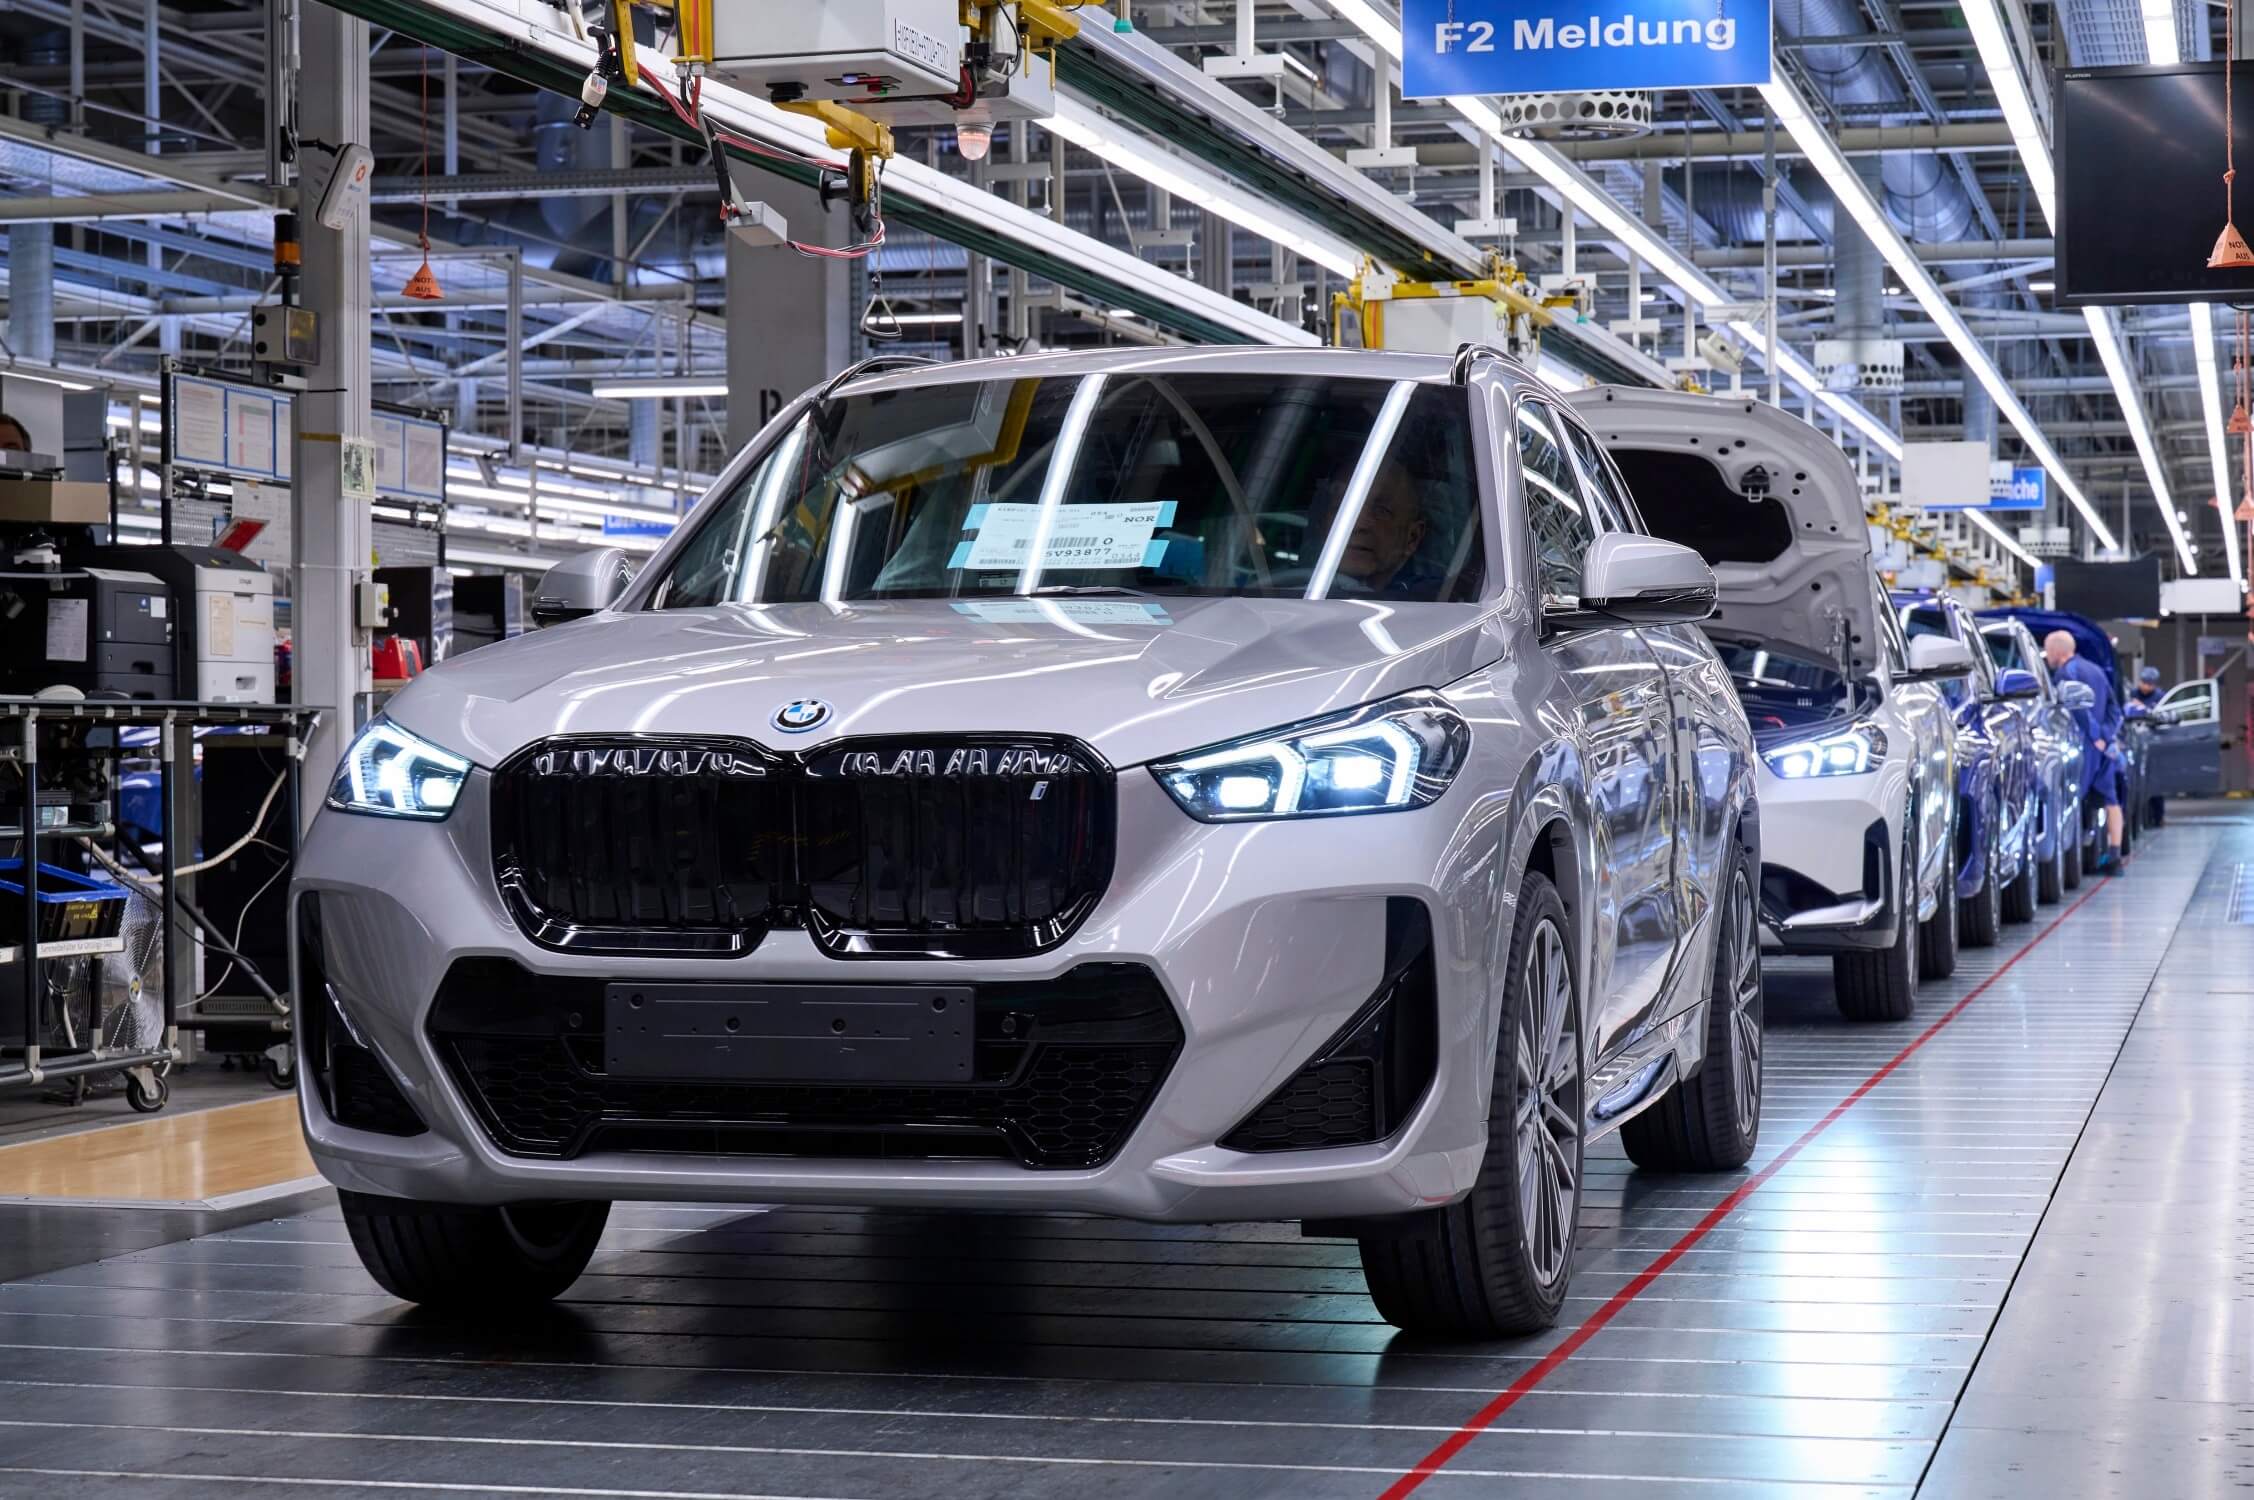 BMW расширяет производство аккумуляторов, инвестируя 1,4 миллиарда долларов